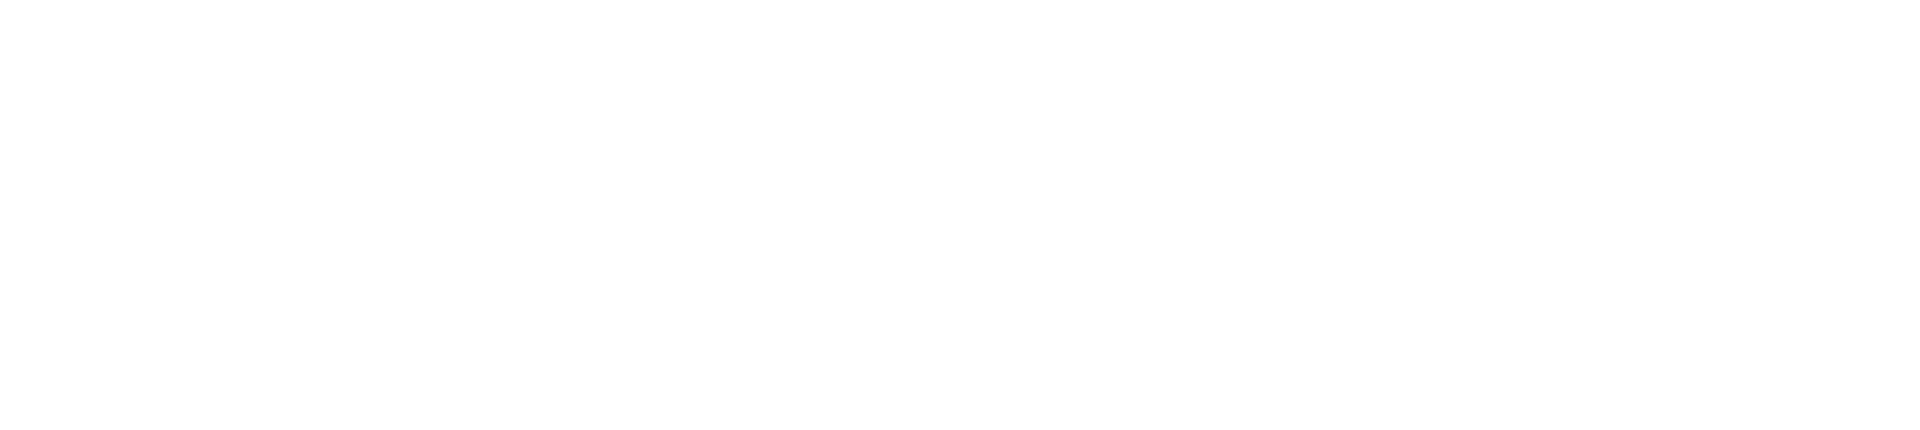 Macklemore Logo - Enter for a chance to meet and see Macklemore live in Nashville